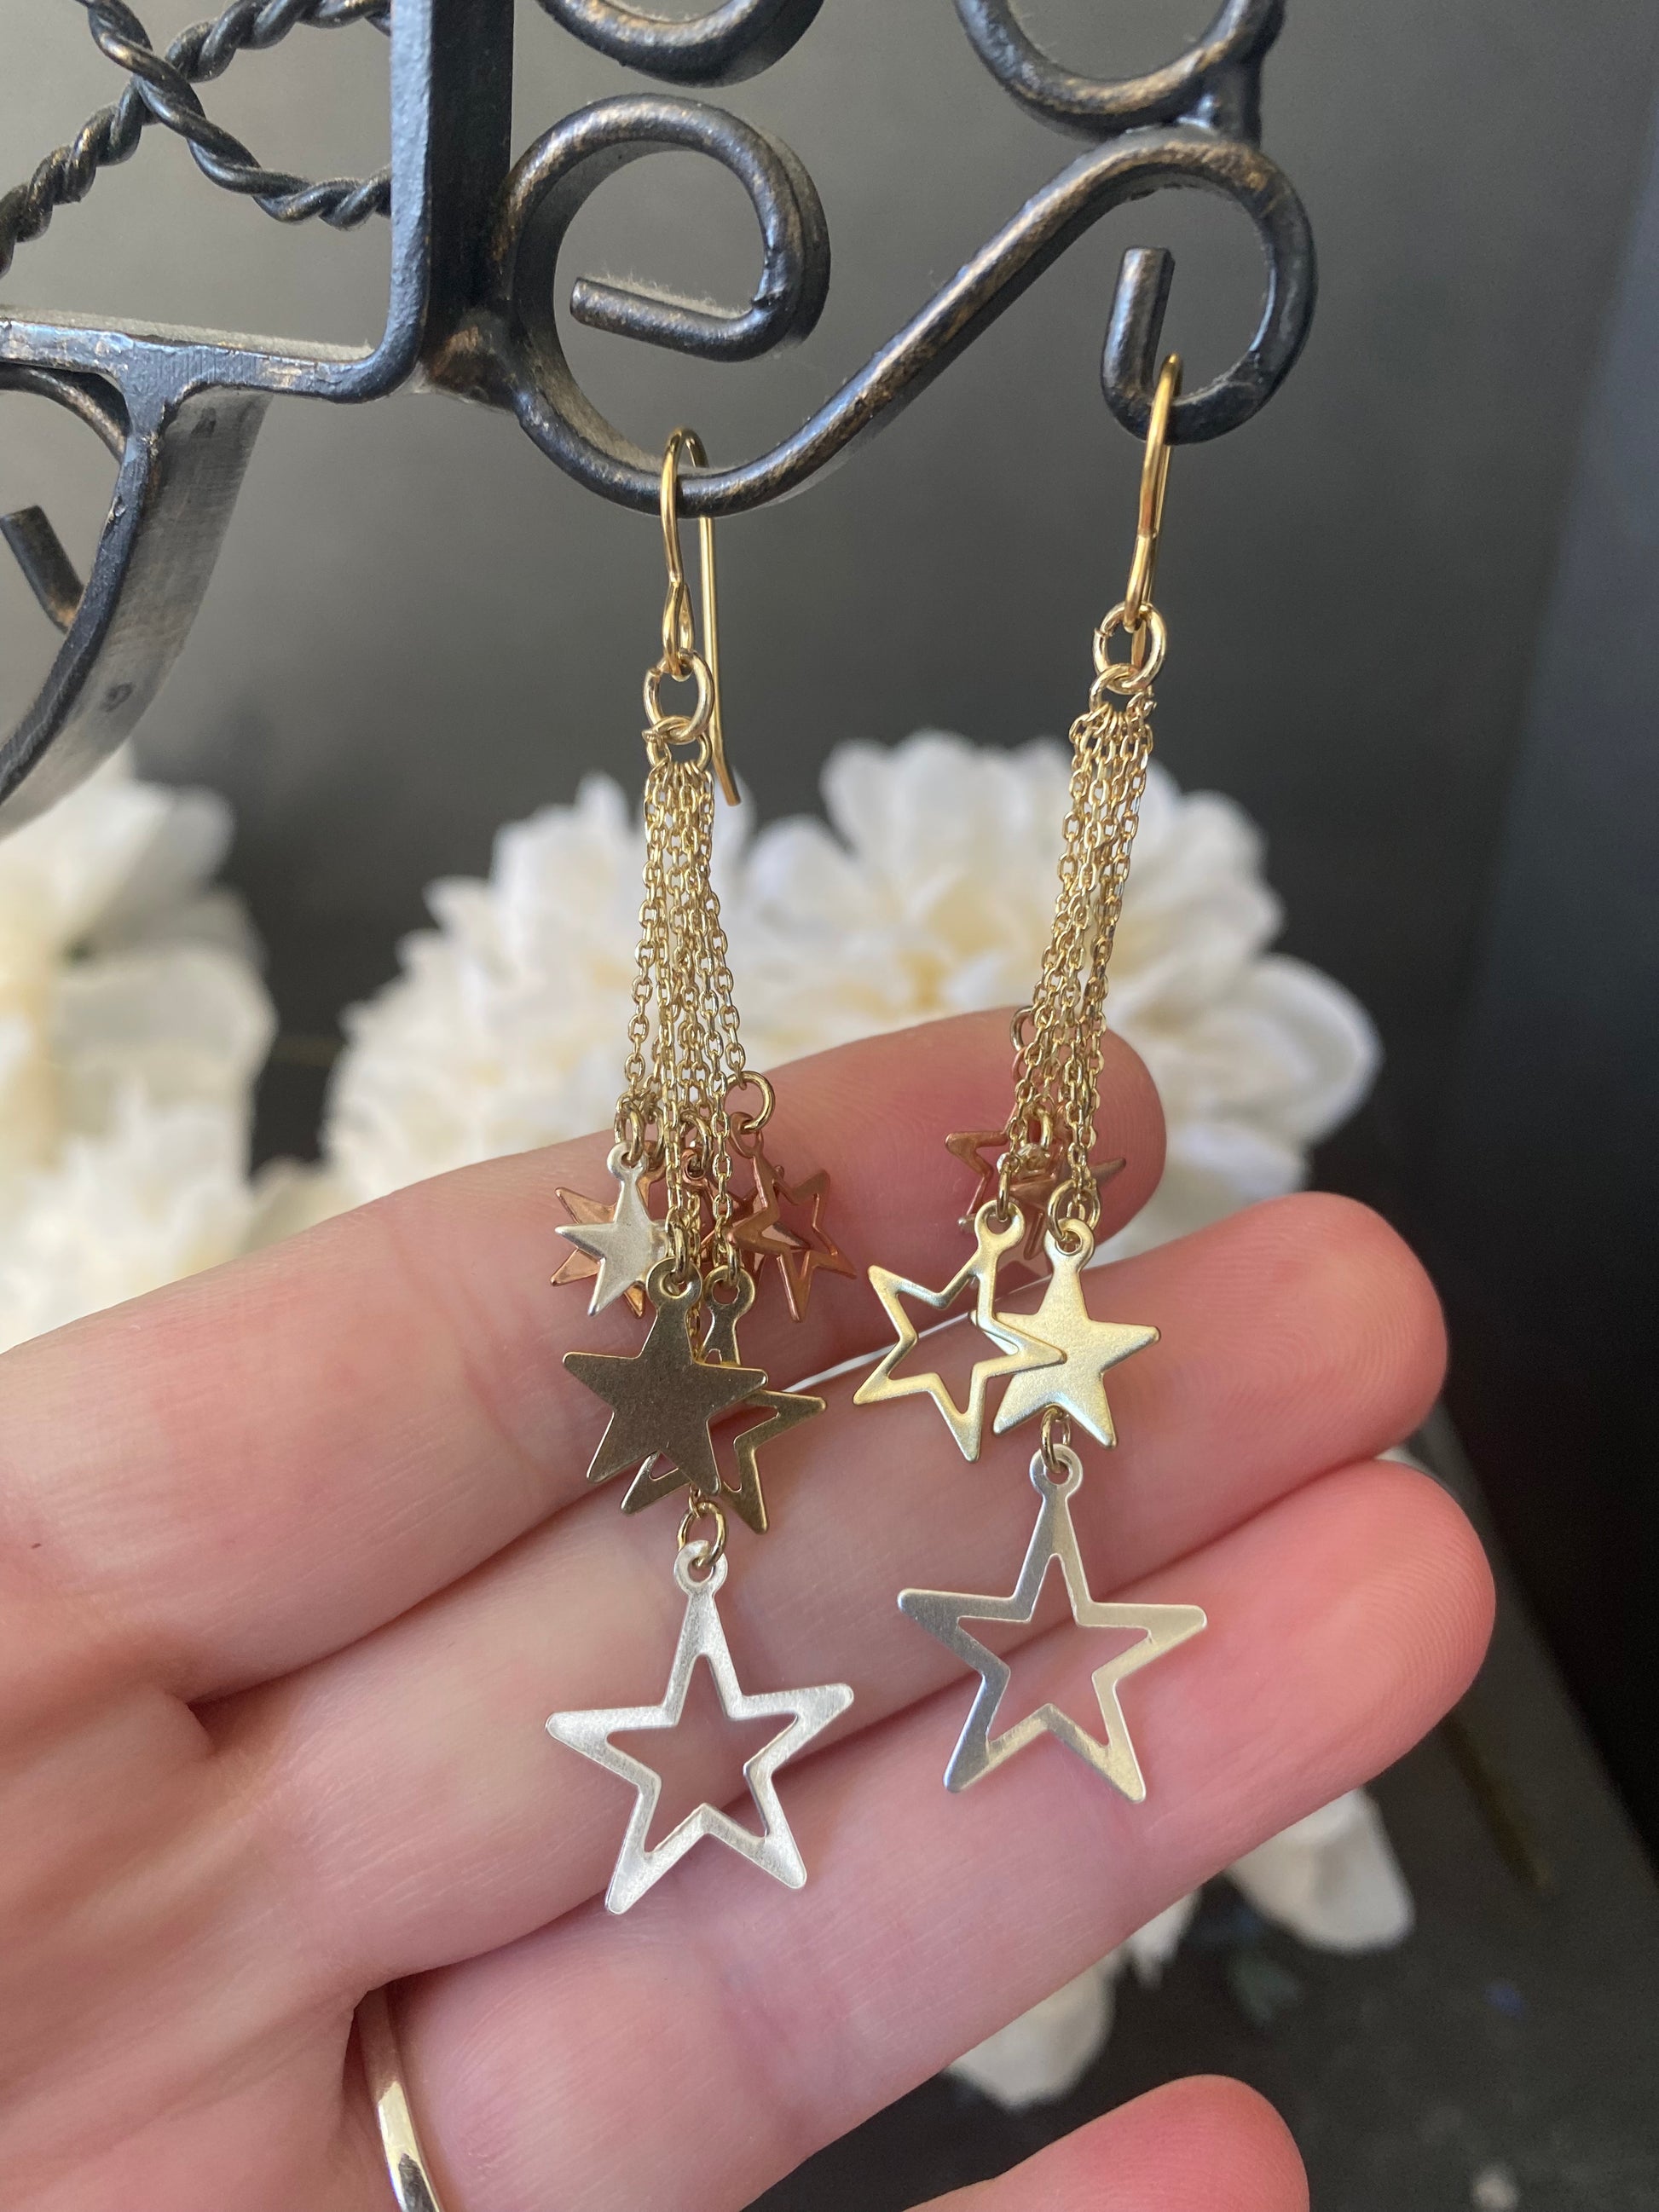 Star charm earrings, mixed metal, jewelry - Andria Bieber Designs 